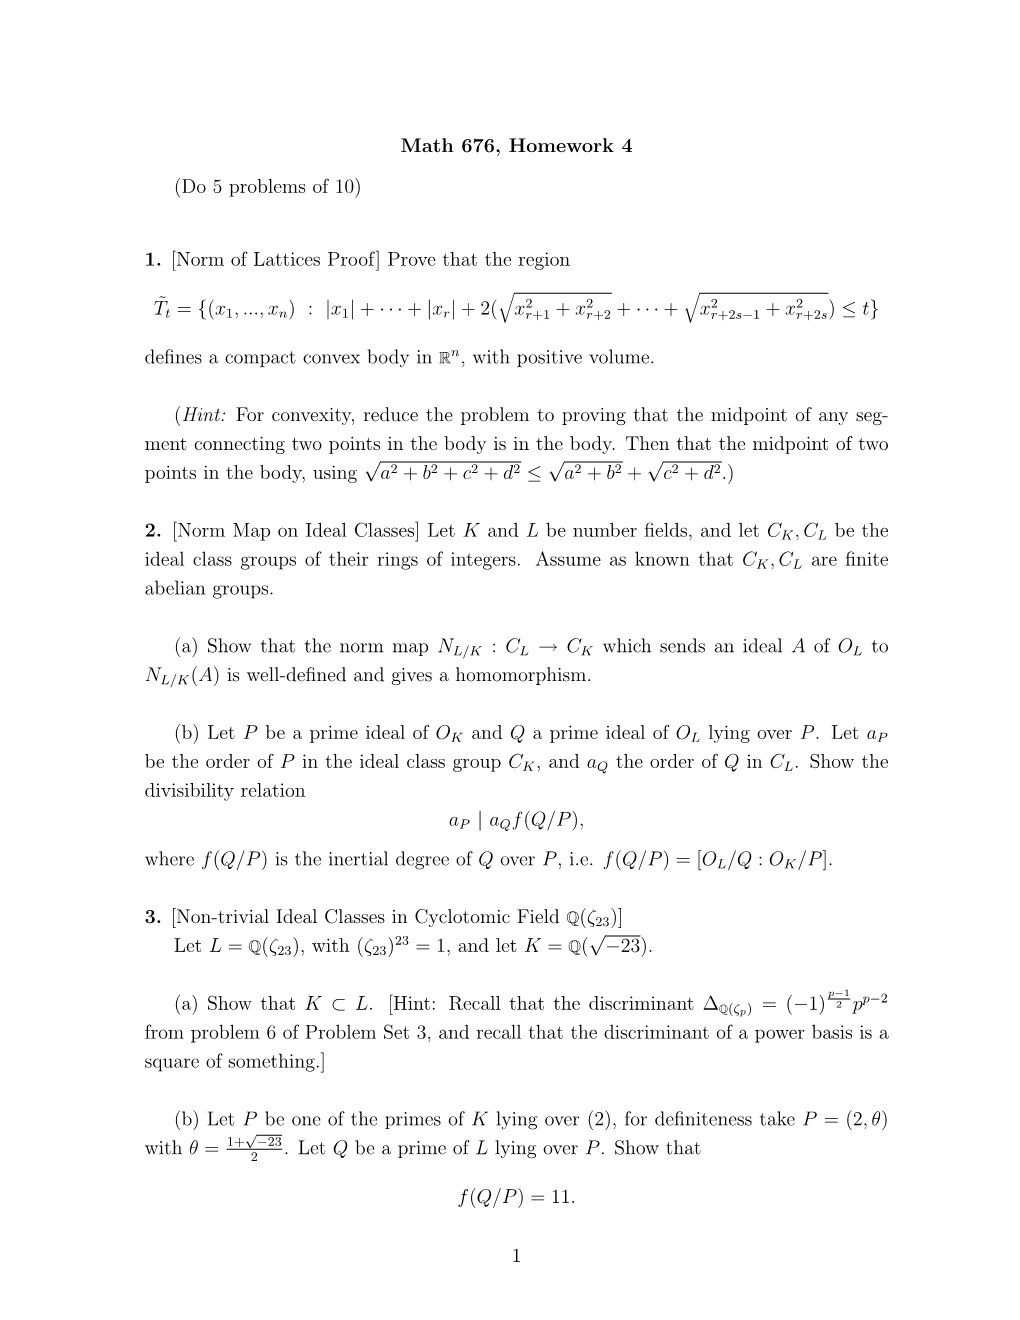 Math 676, Homework 4 (Do 5 Problems of 10) 1. [Norm of Lattices